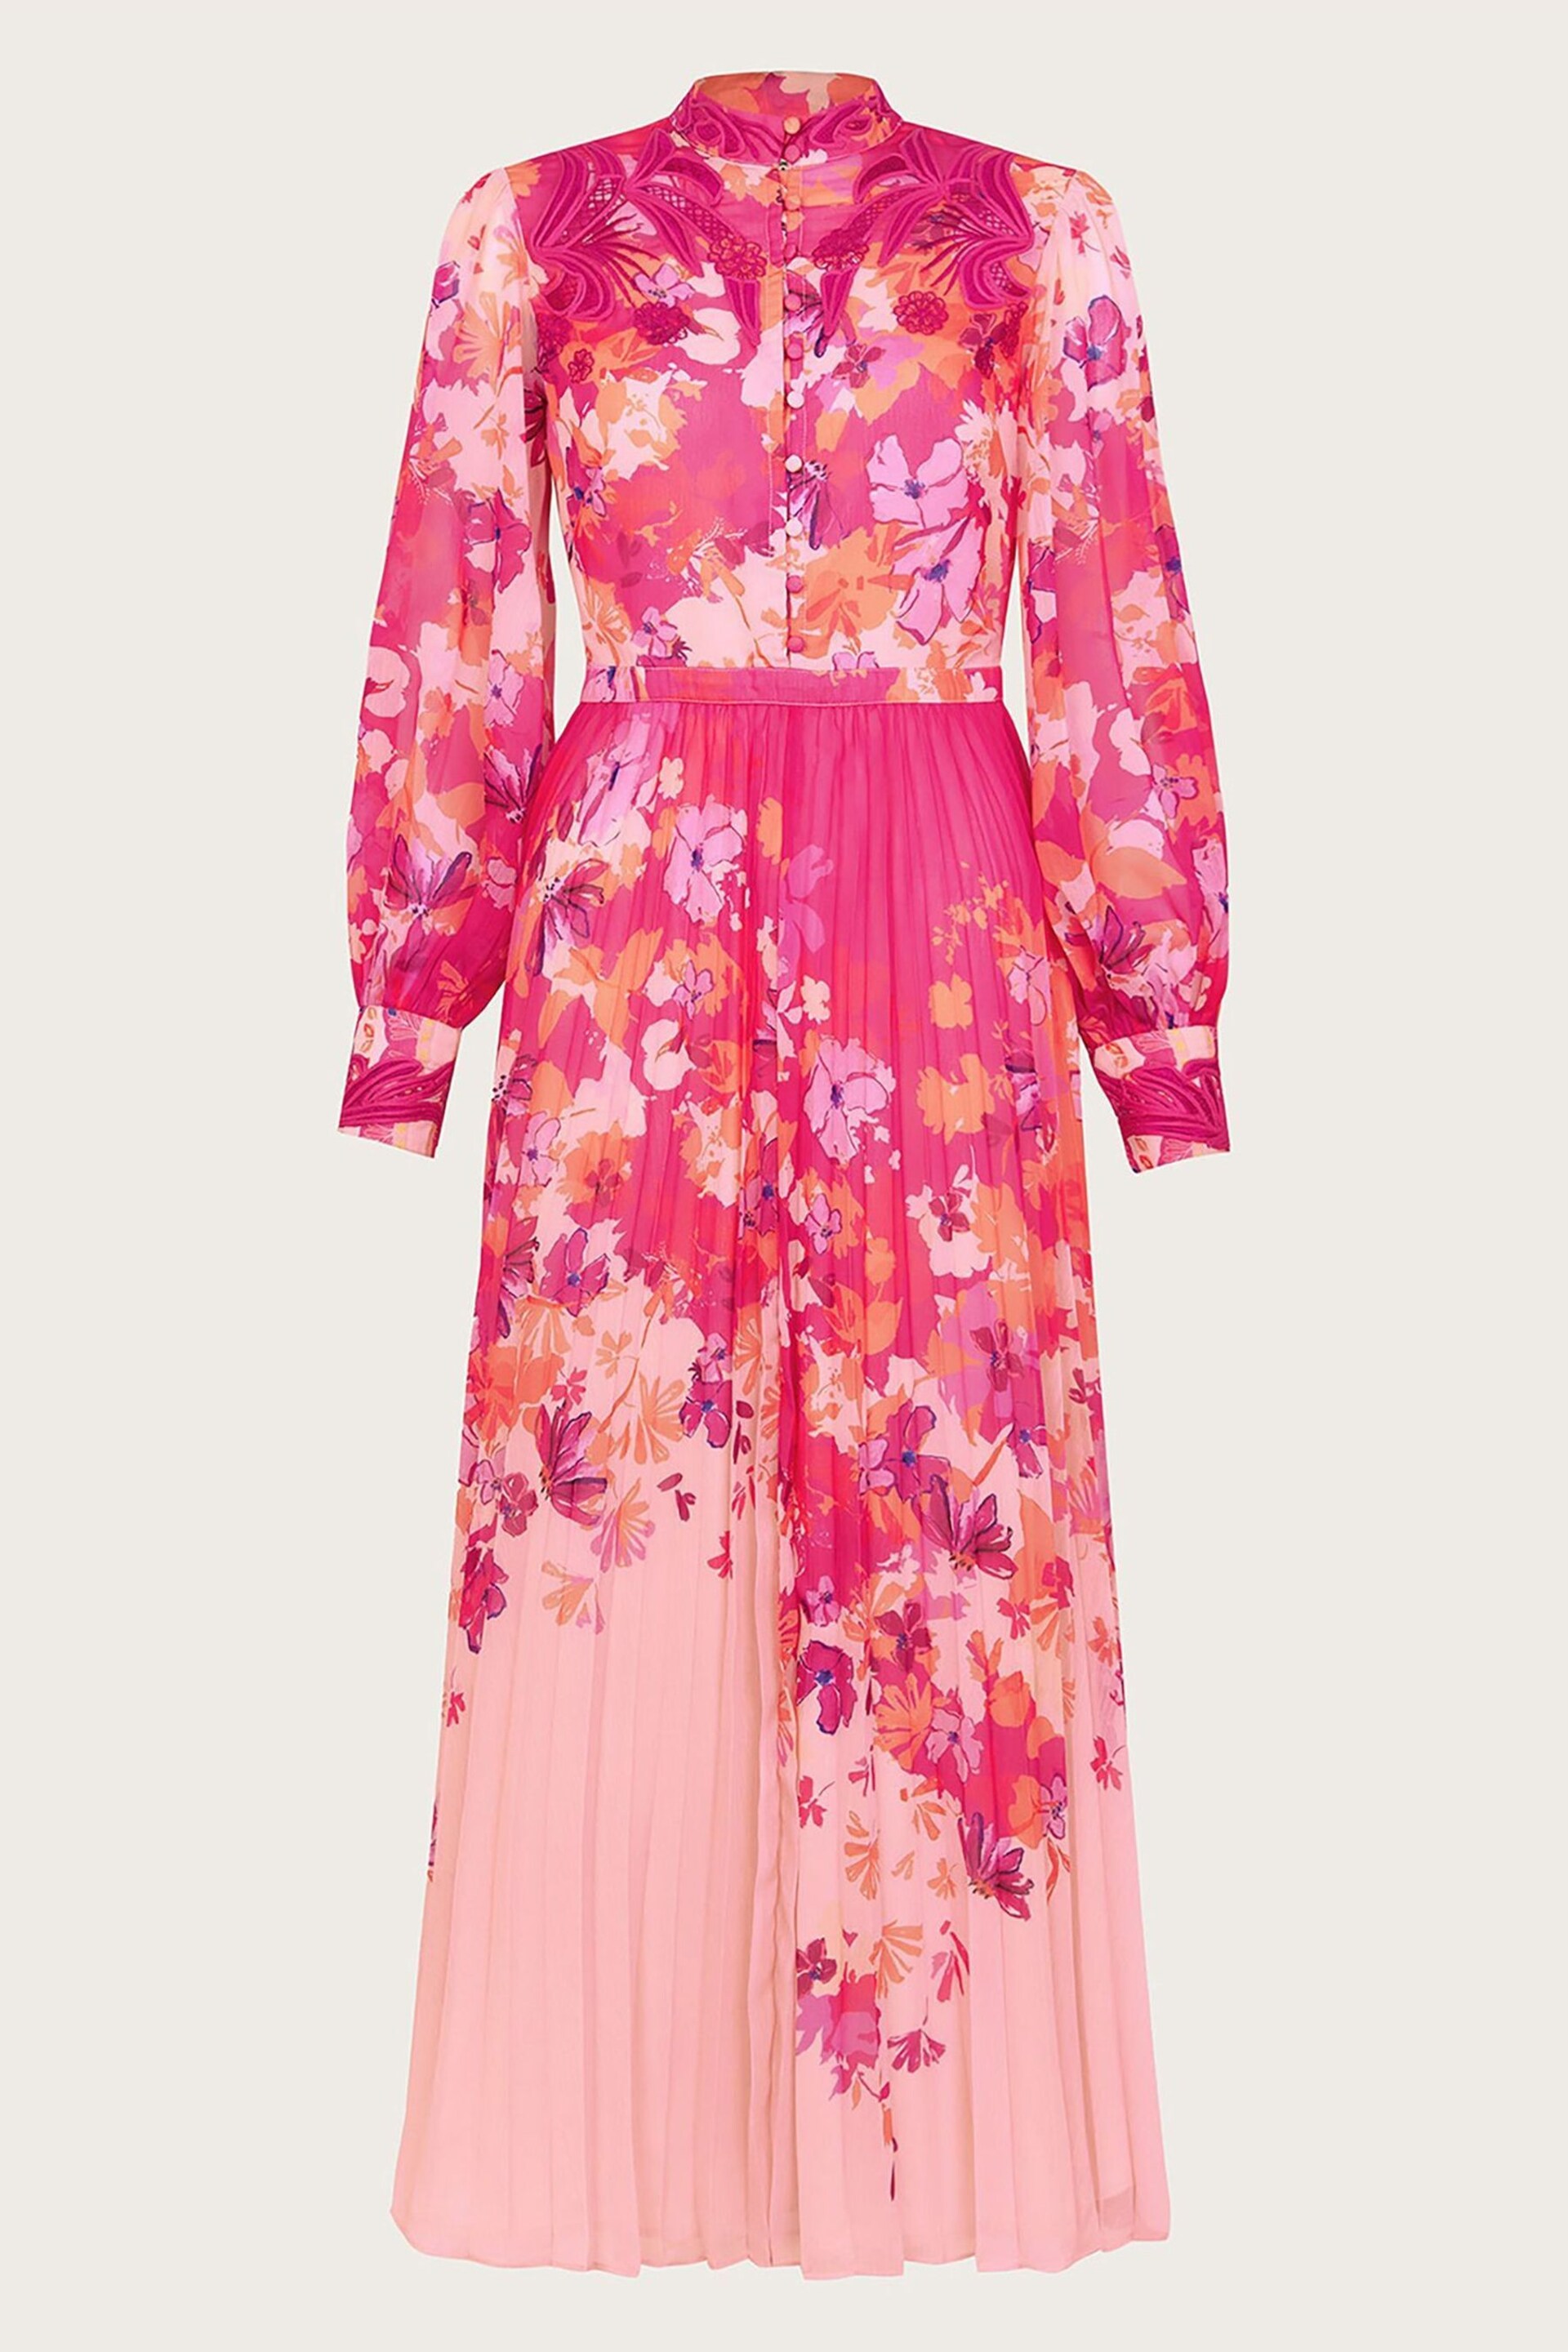 Monsoon Pink Floryn Floral Shirt Dress - Image 5 of 5